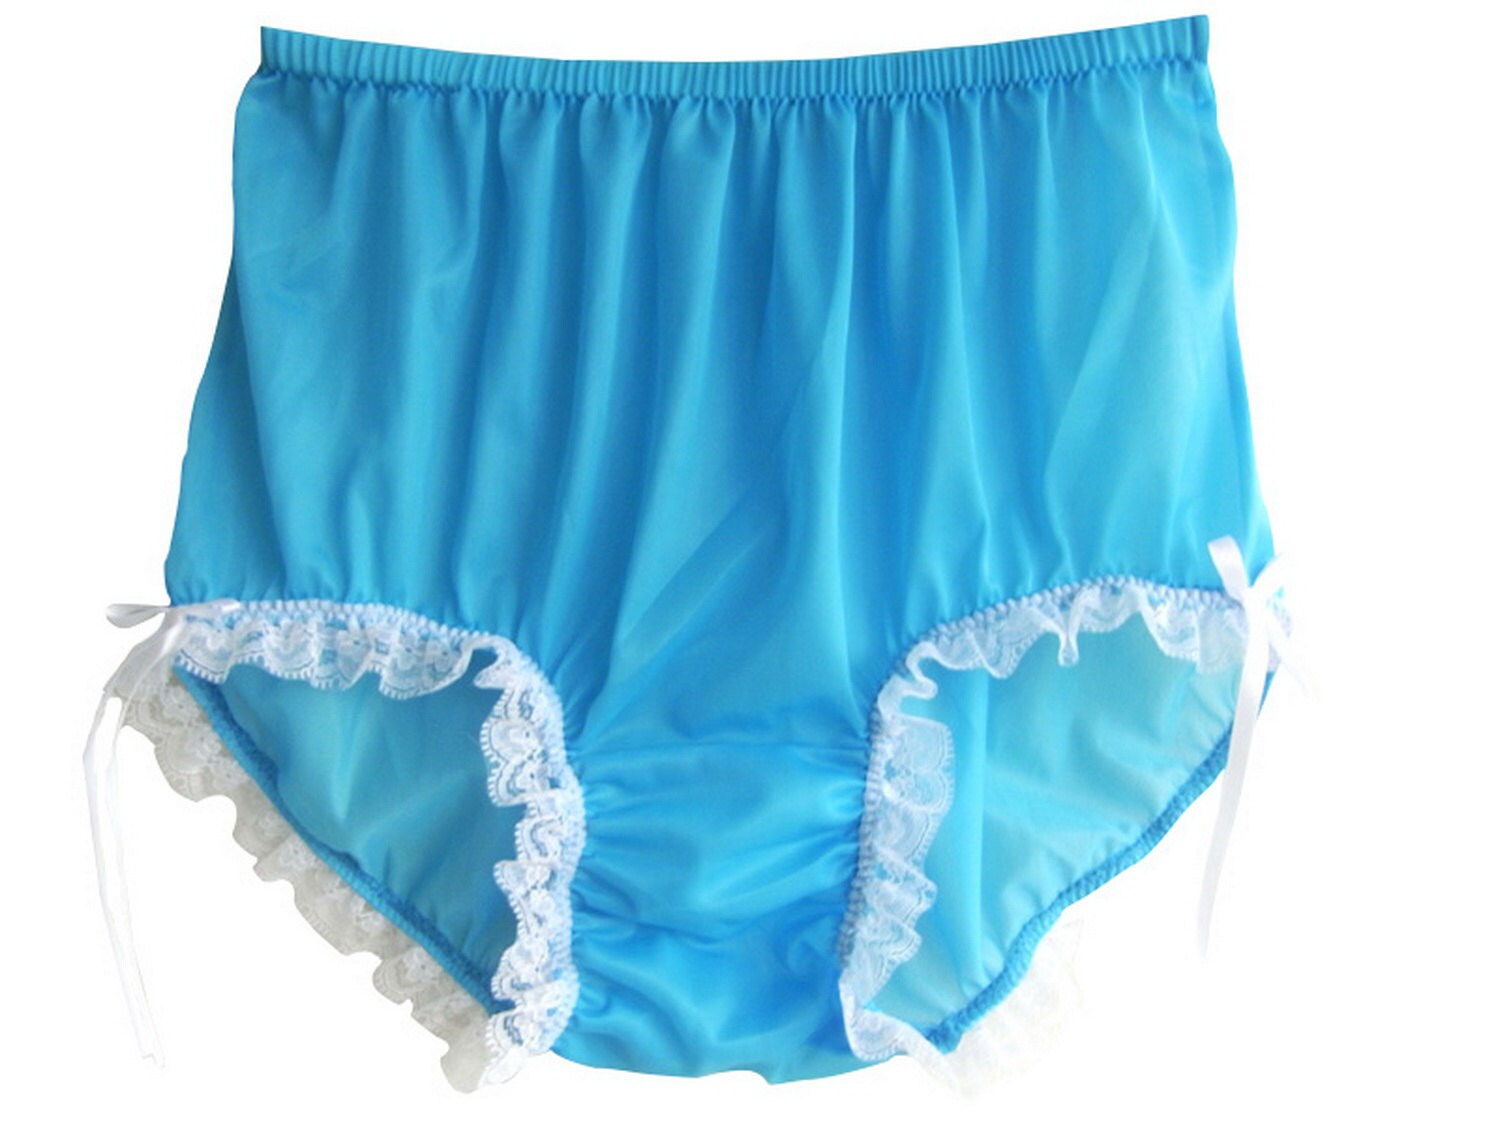 S3H14 BLUE Handmade Lingerie Fantasy Party underwear sheer